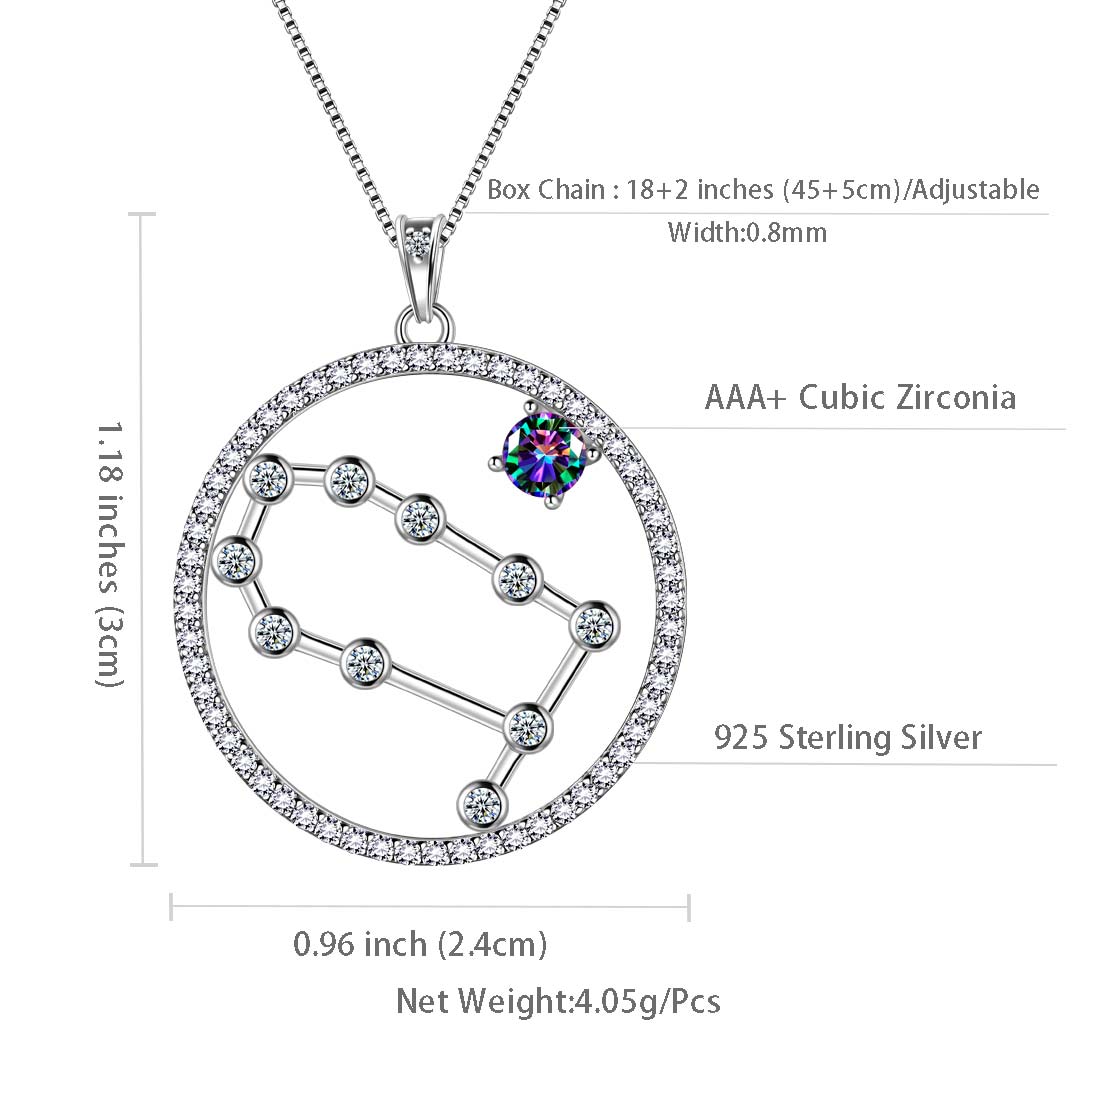 Gemini Zodiac Necklace 925 Sterling Silver - Necklaces - Aurora Tears Jewelry